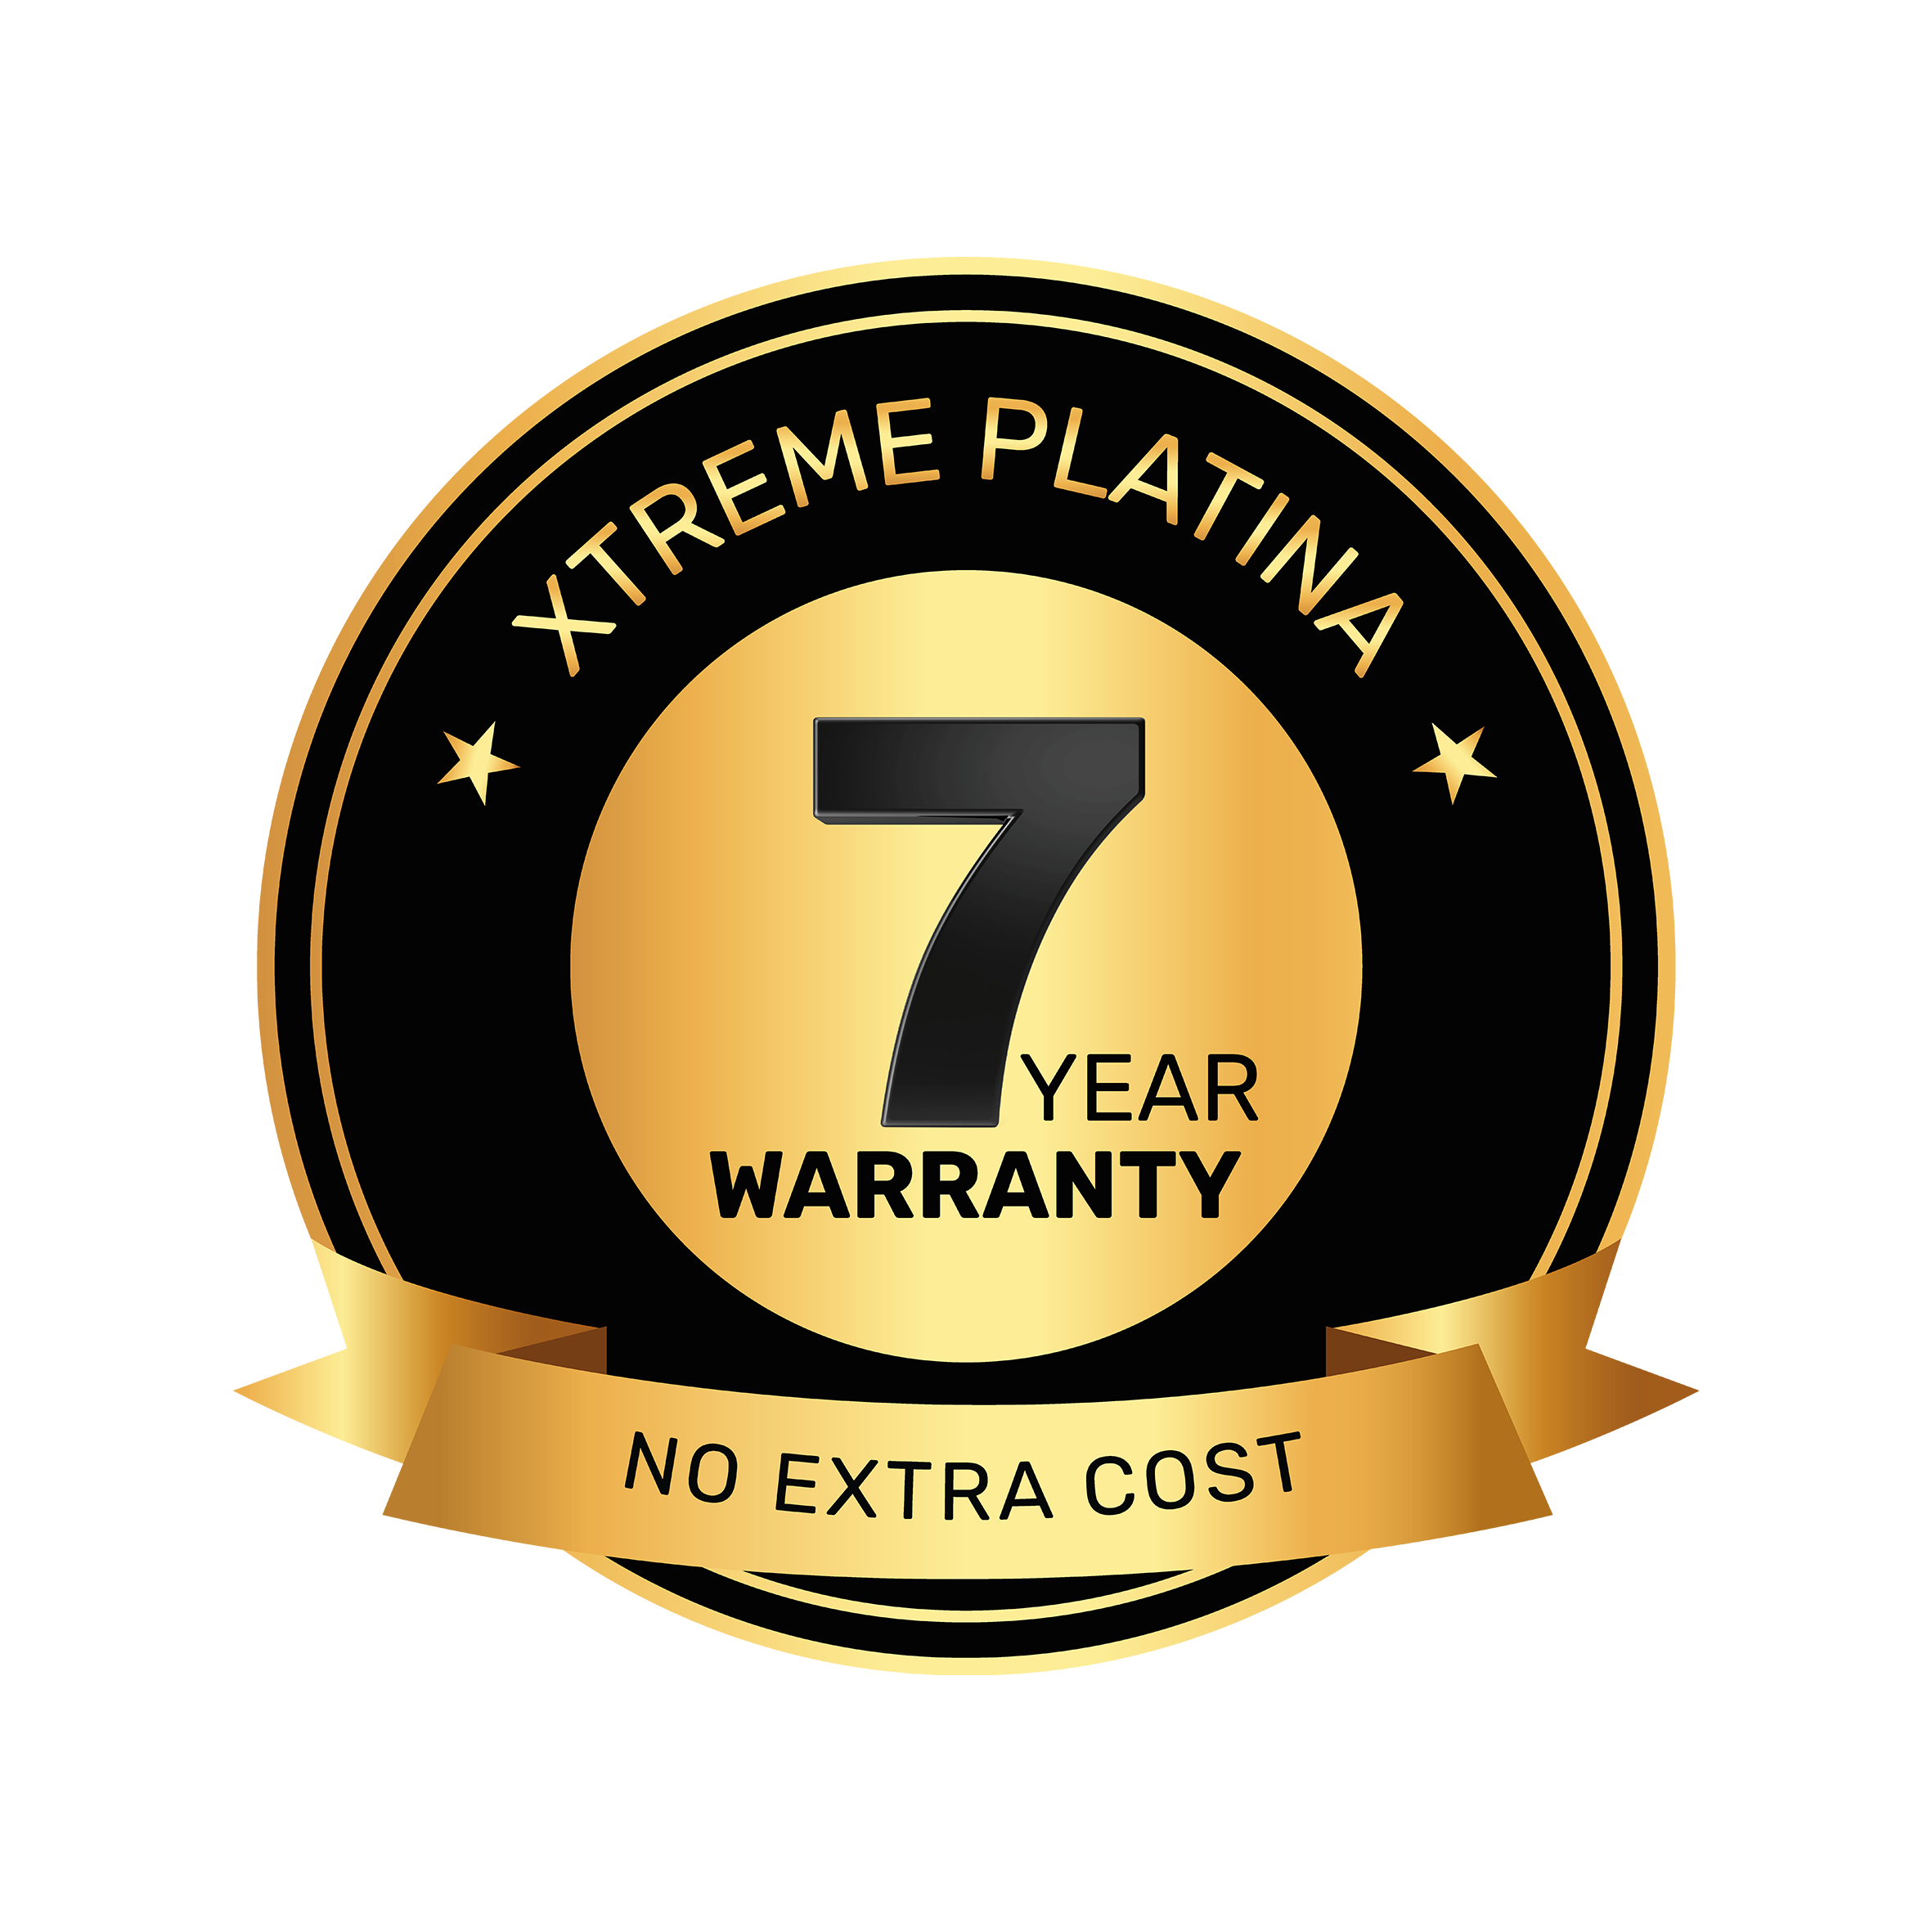 Xtreme Platina 7 Year Warranty